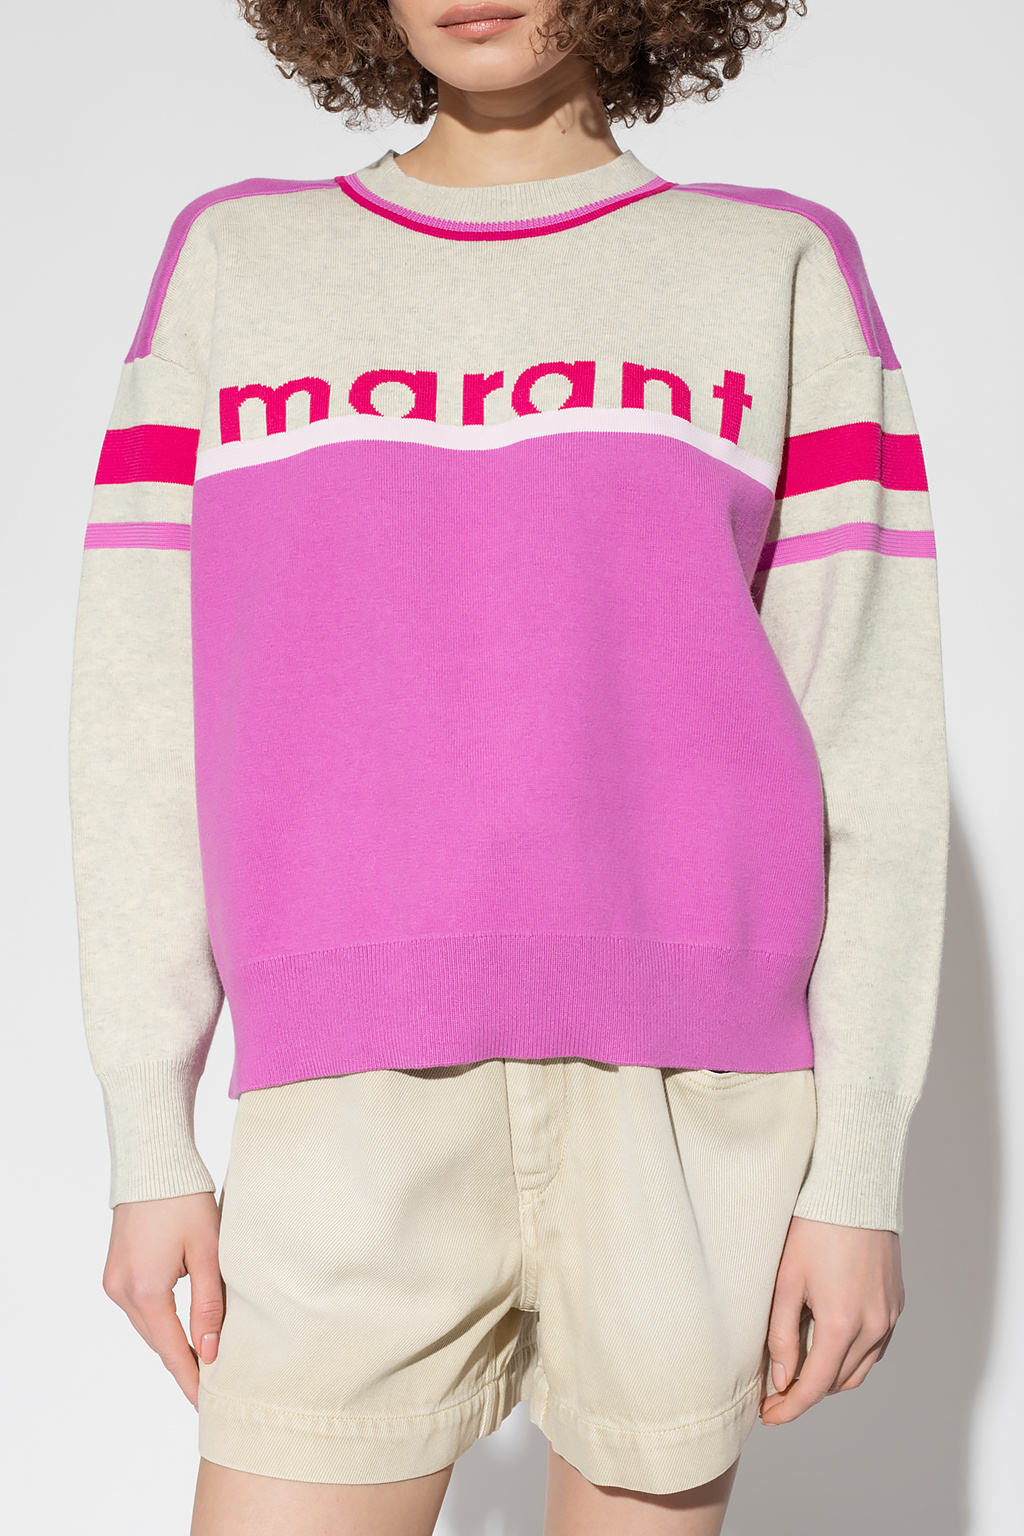 Marant Etoile ‘Carry’ def sweater